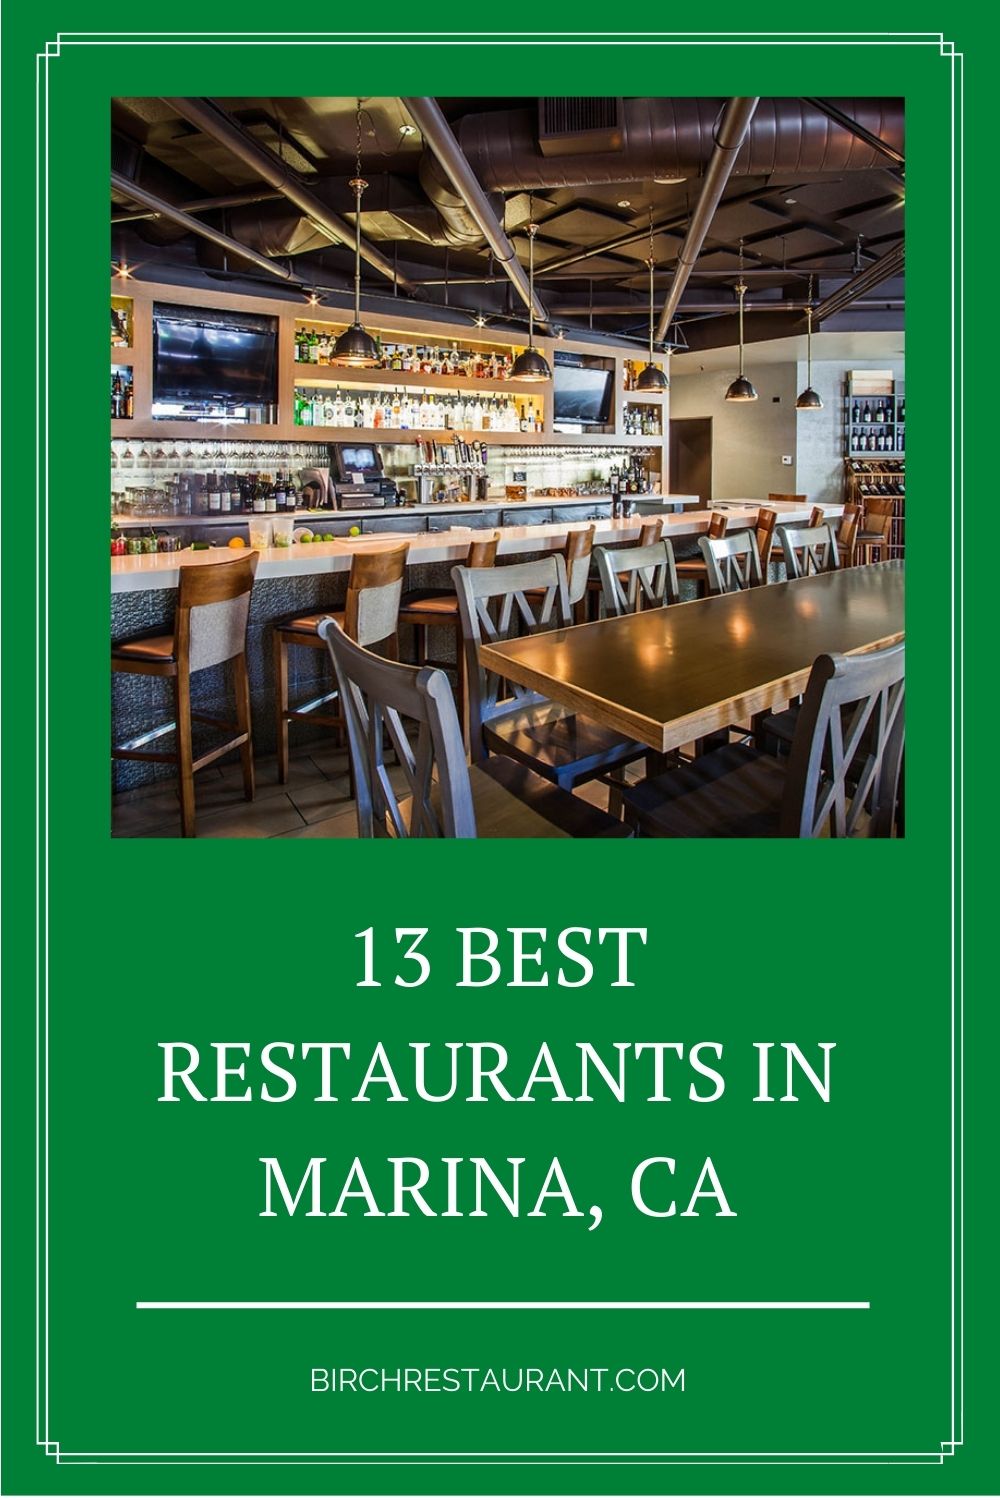 Best Restaurants in Marina